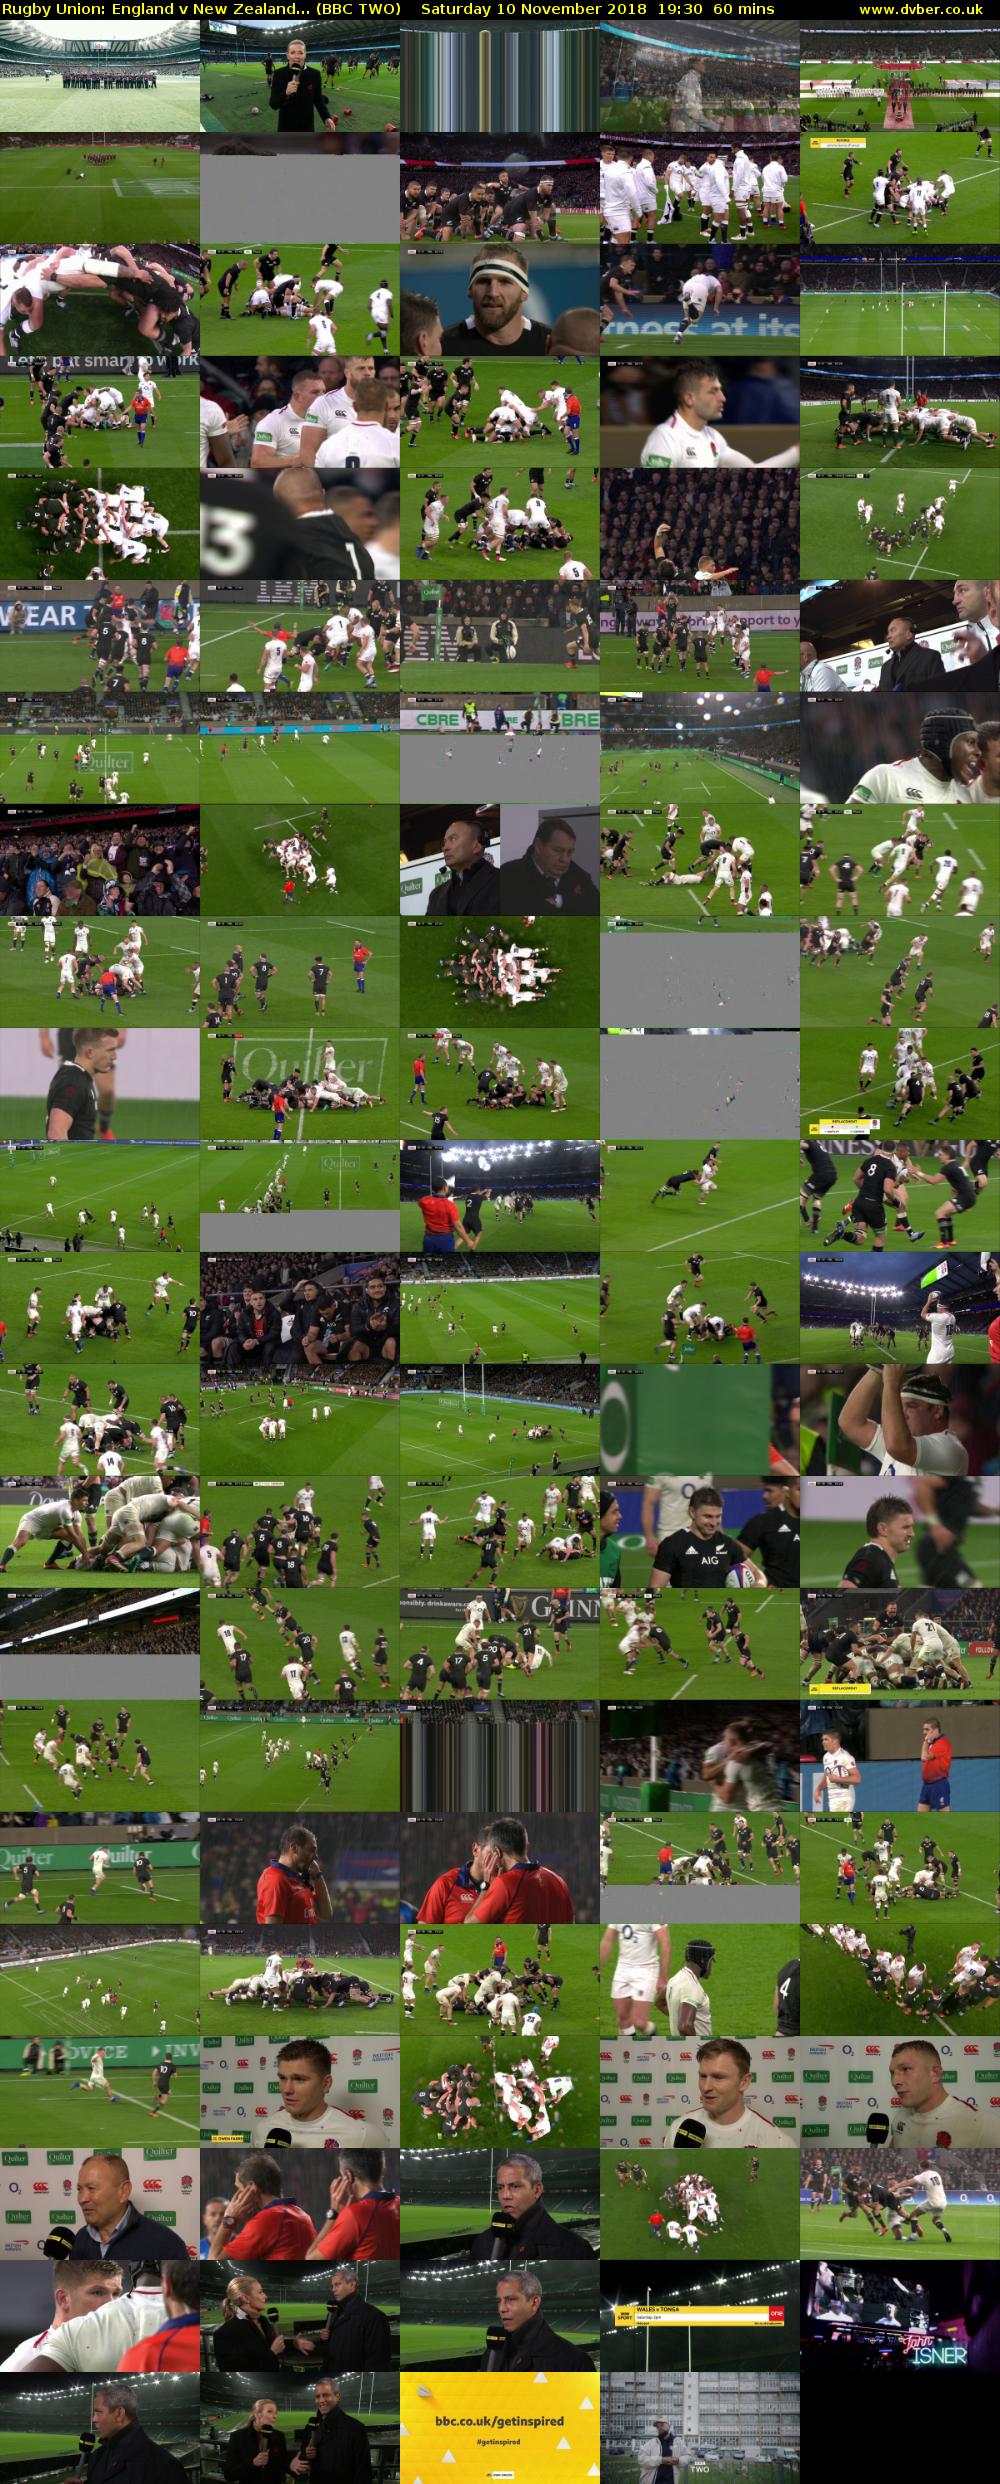 Rugby Union: England v New Zealand... (BBC TWO) Saturday 10 November 2018 19:30 - 20:30